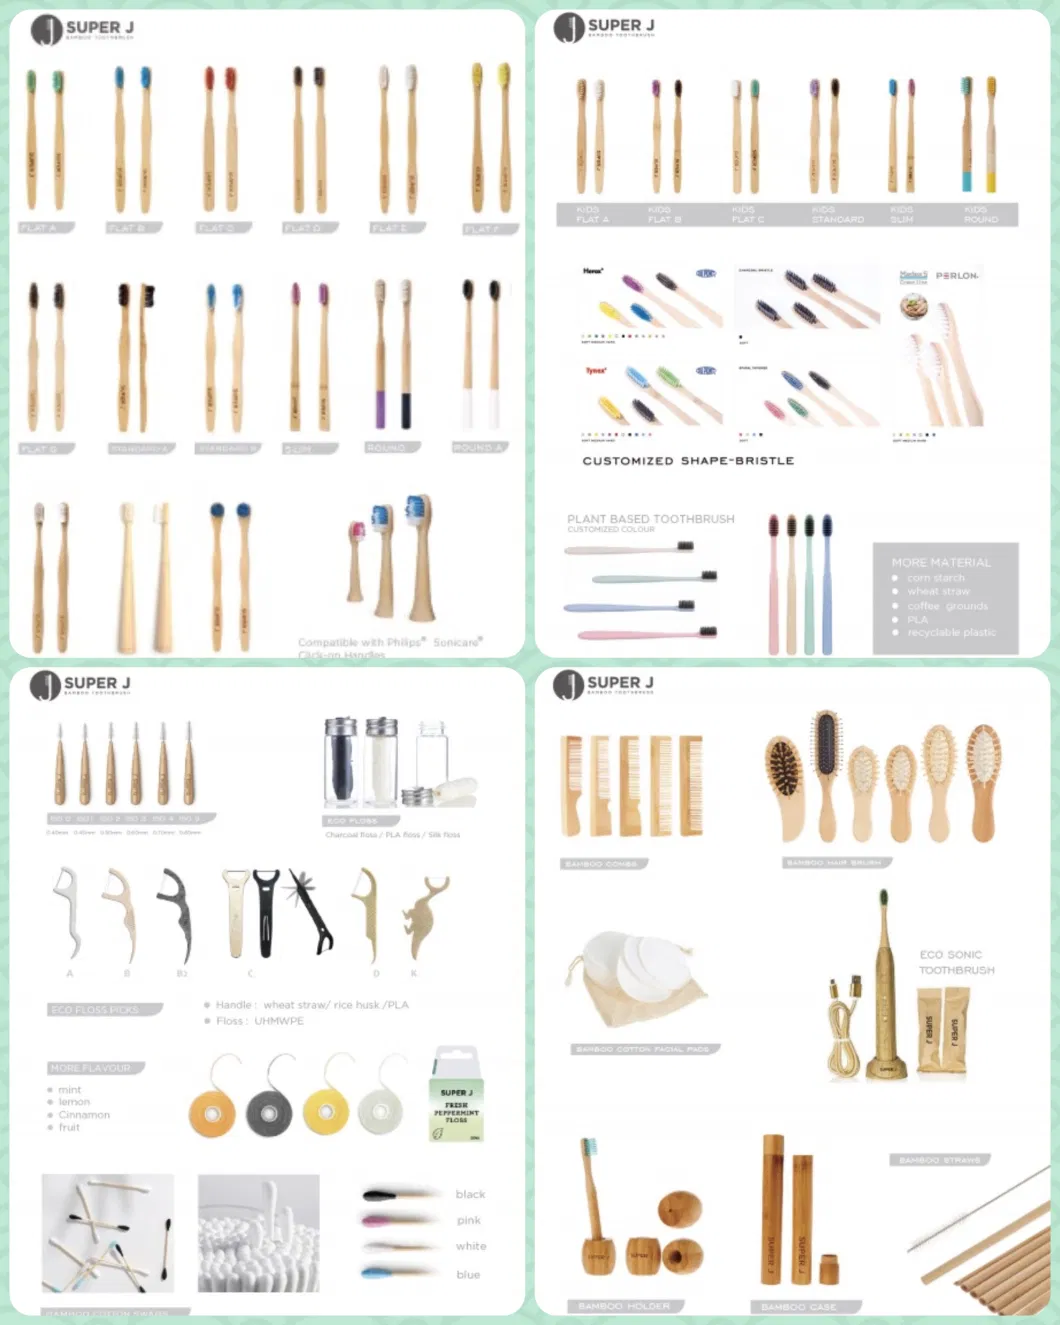 Hot Selling Biodegradable Bamboo Dental Floss Pick Bamboo Floss Pick Bamboo Flosser